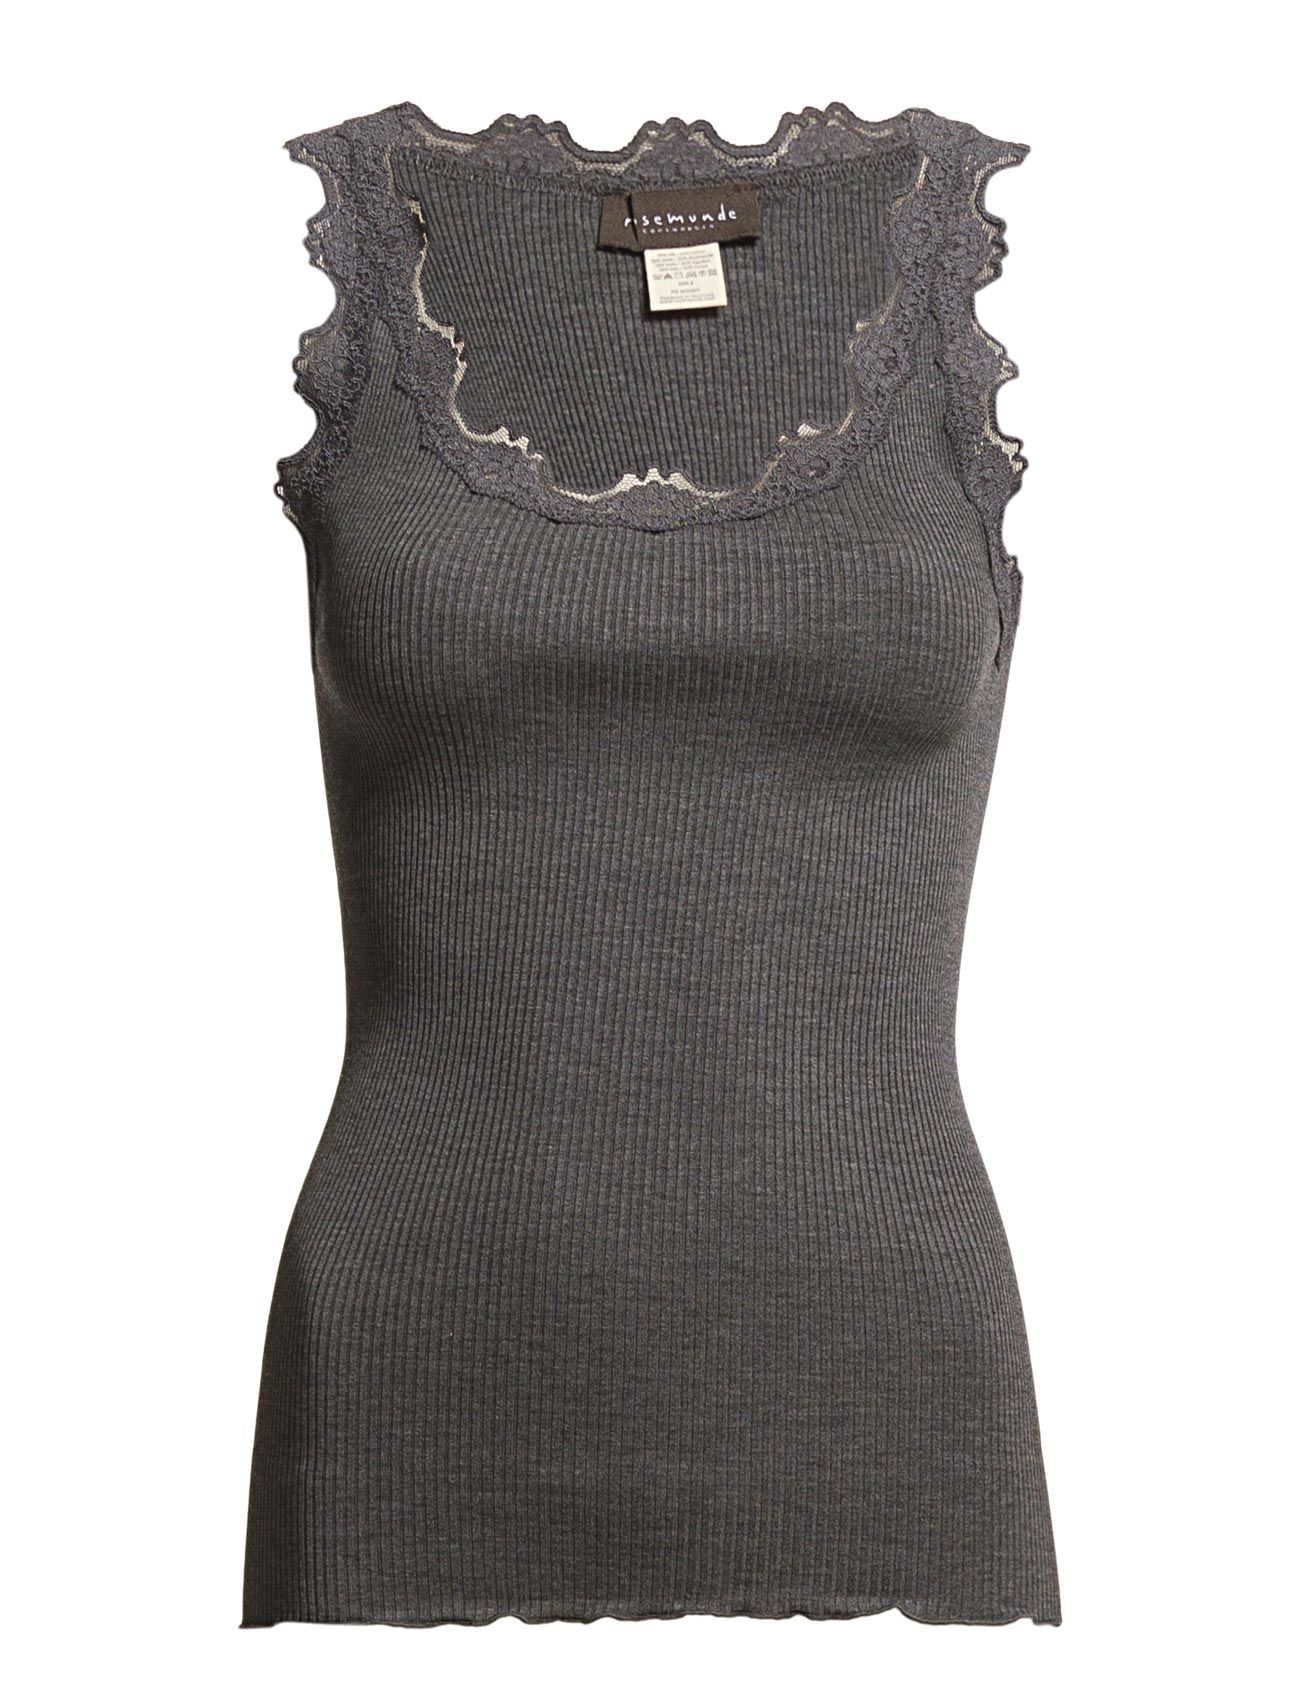 Rosemunde - Silk top w/ lace - sleeveless tops - dark grey melange - 1